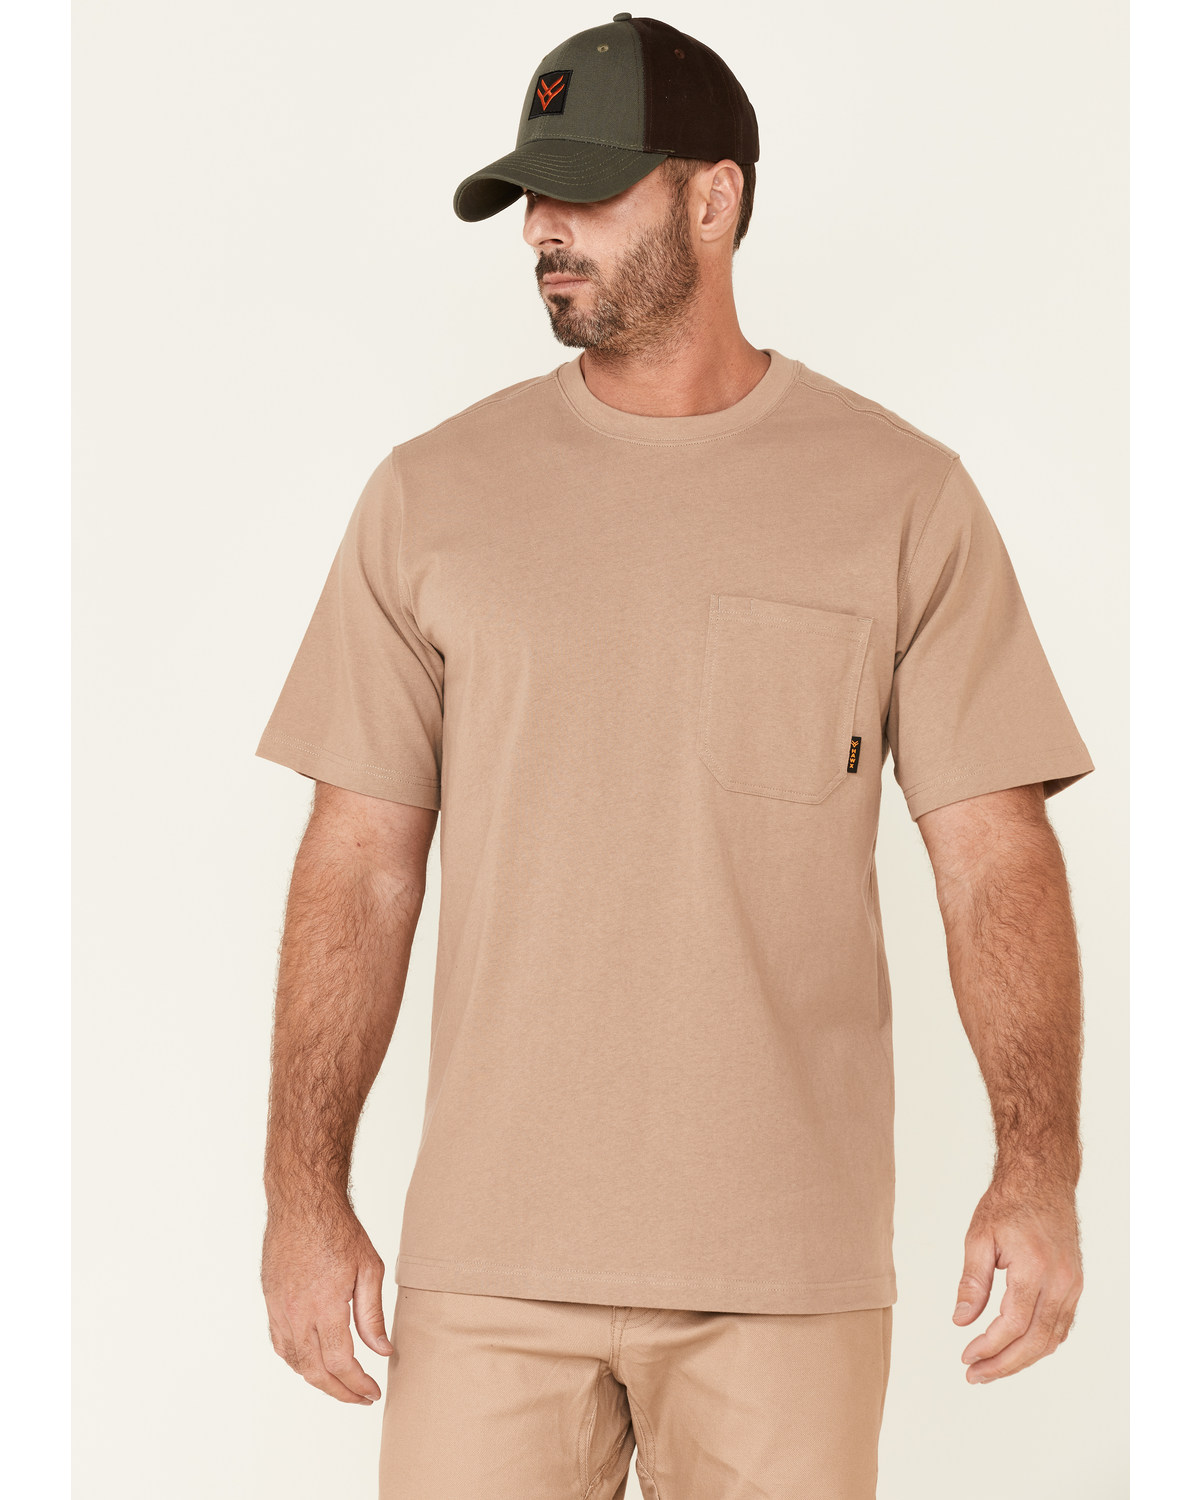 Hawx Men's Solid Natural Forge Short Sleeve Work Pocket T-Shirt